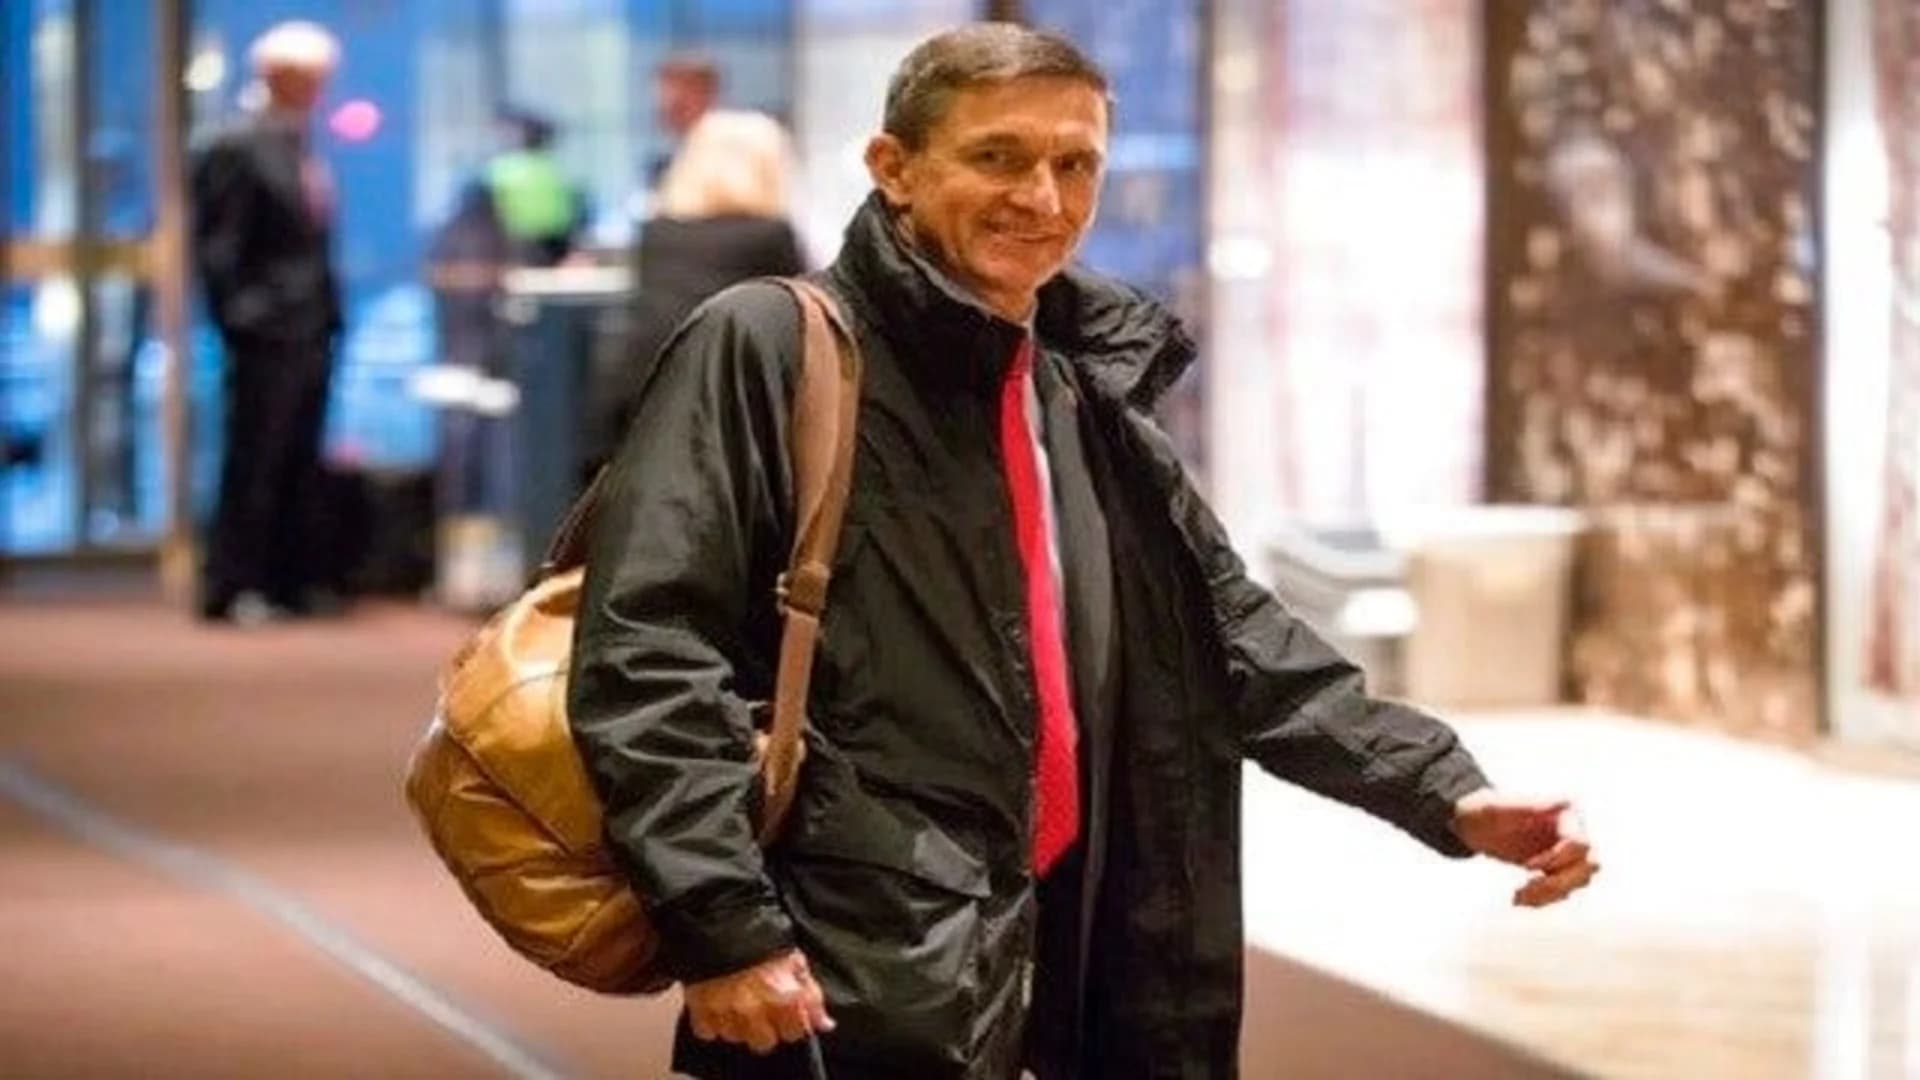 Senate chairman: Flynn has not responded to subpoena